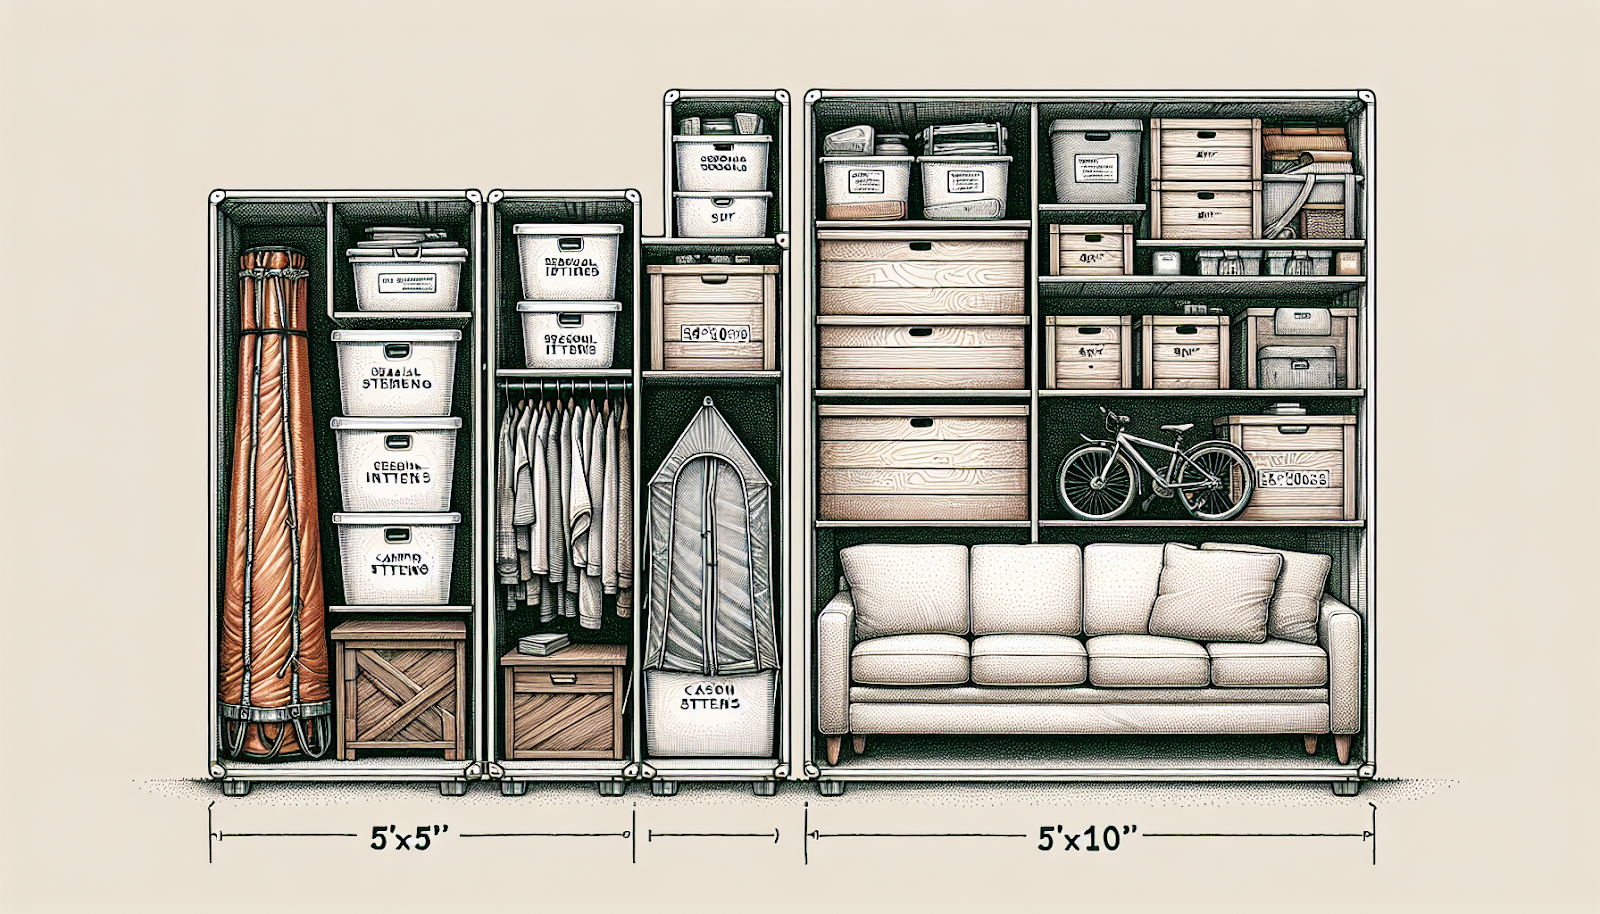 Illustration of a small storage unit